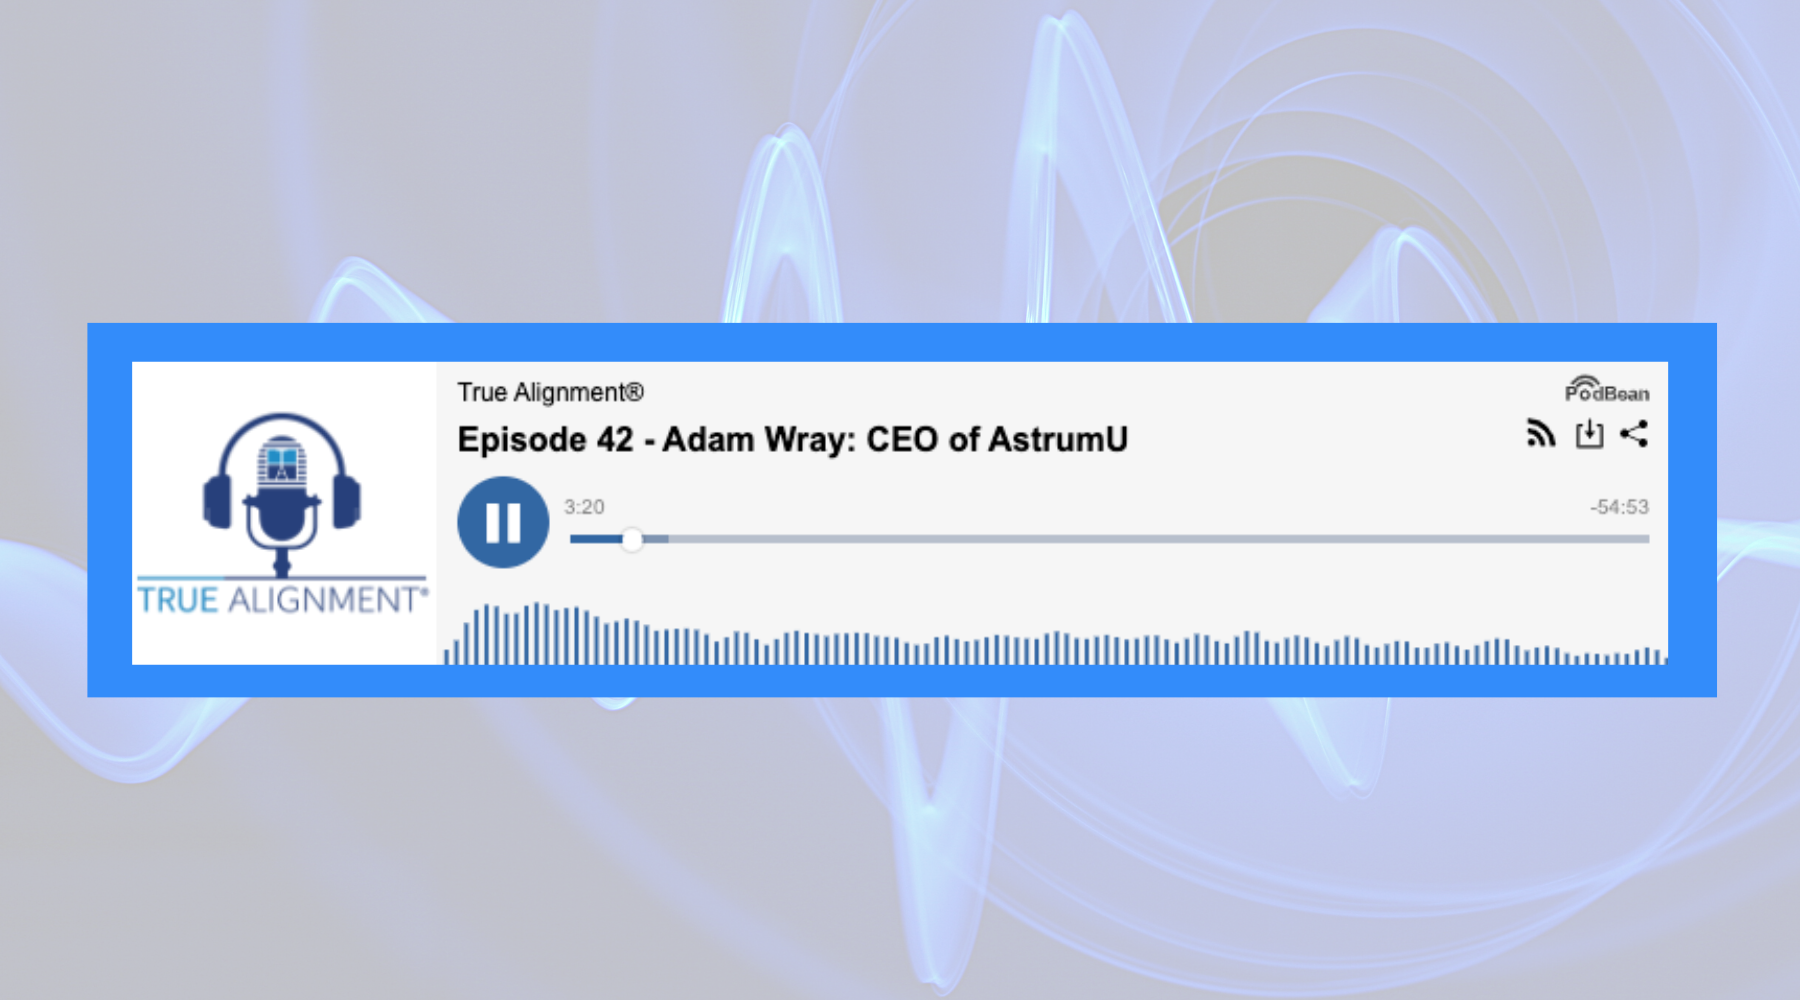 True Alignment podcast header featuring Adam Wray